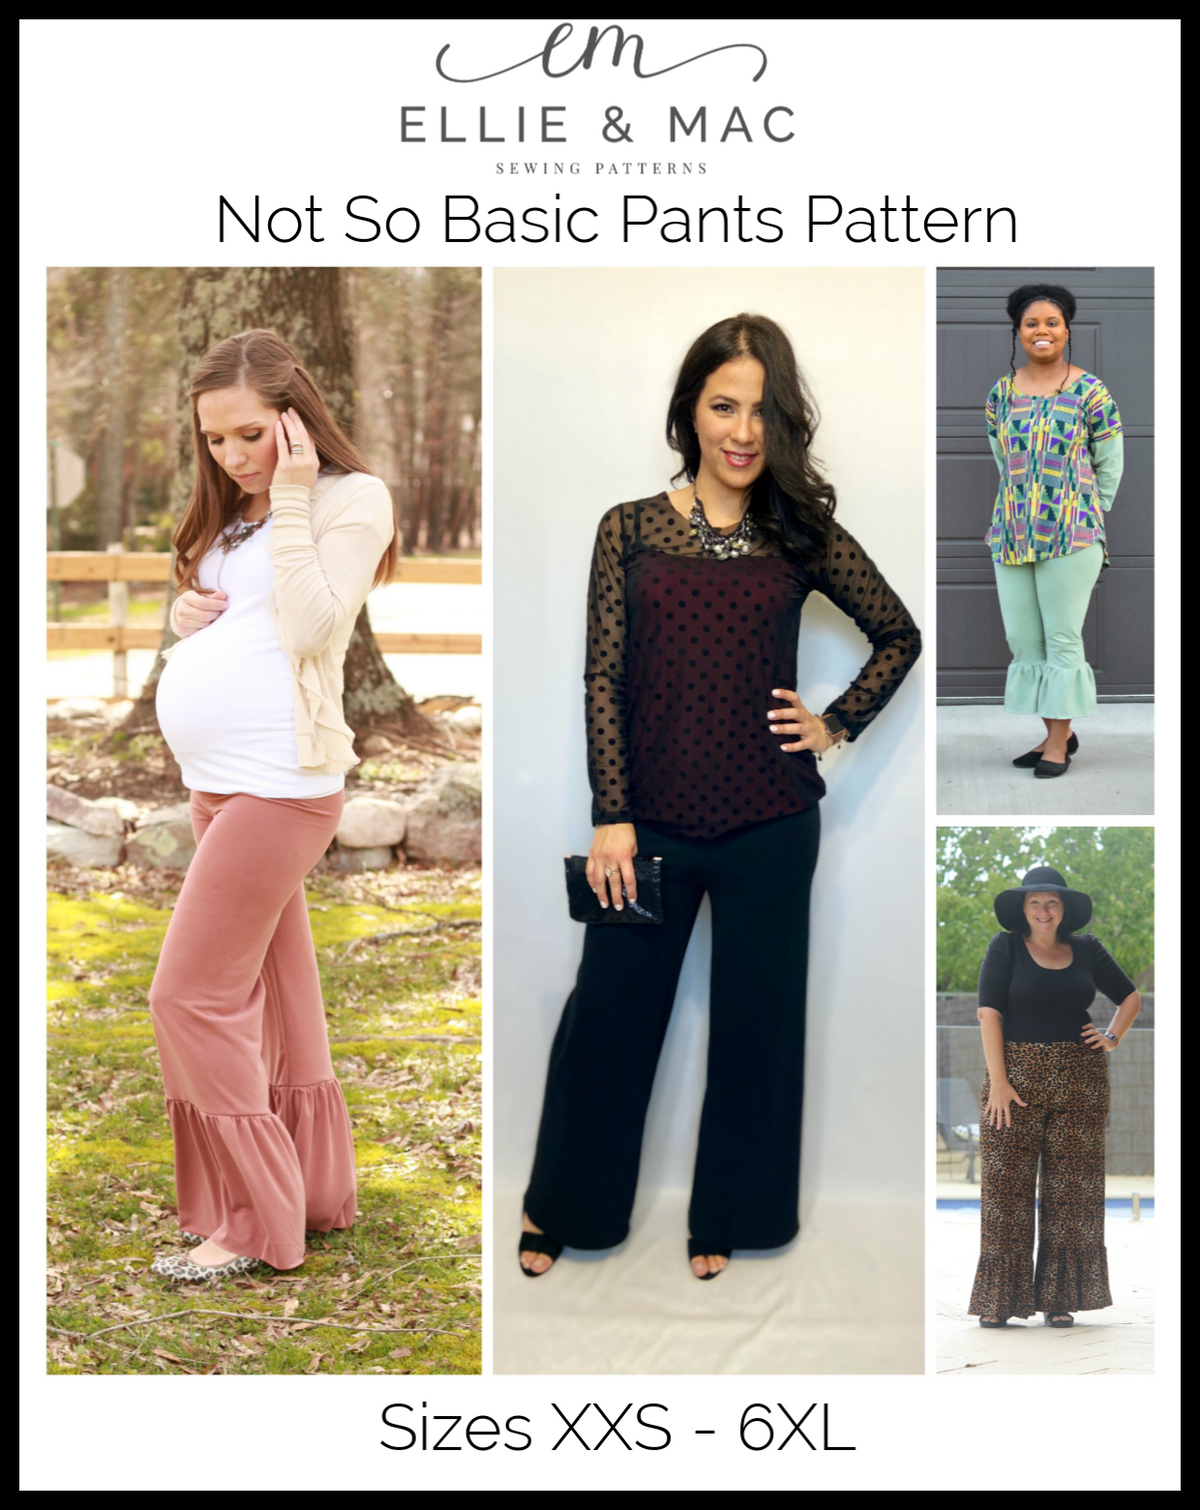 Not So Basic Pants Pattern